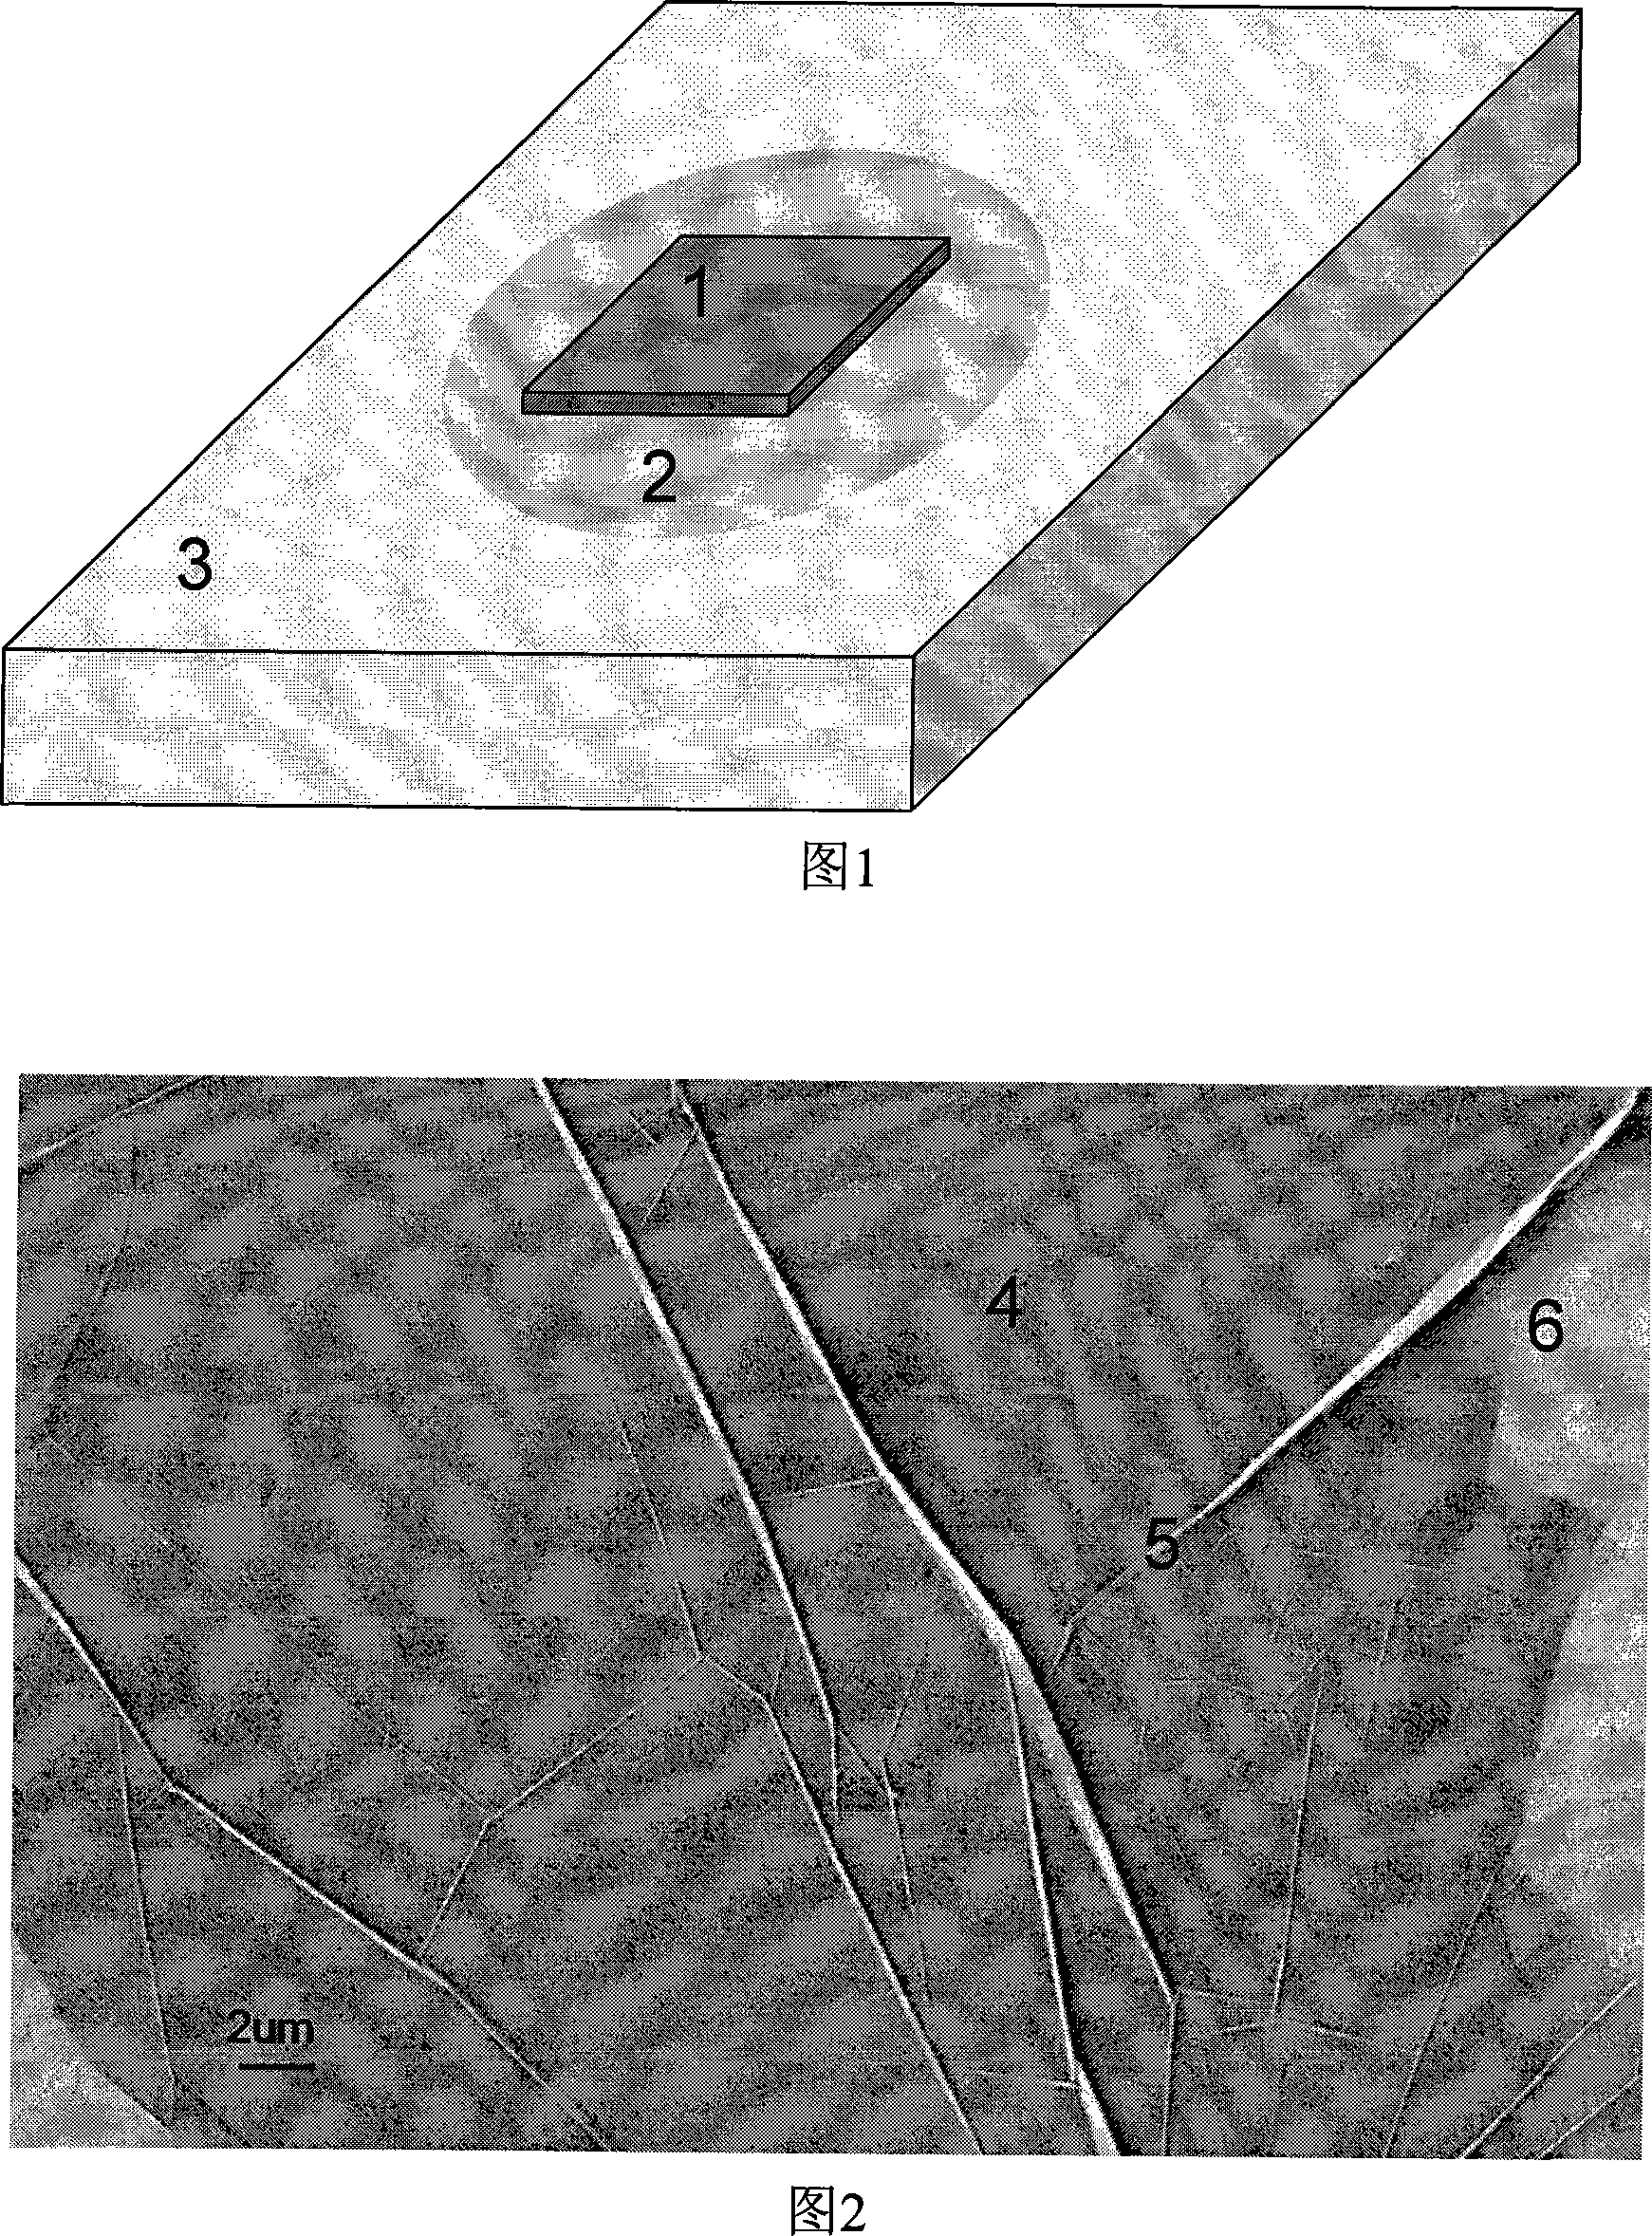 Method for preparing ultra-thin two-dimension graphite sheet